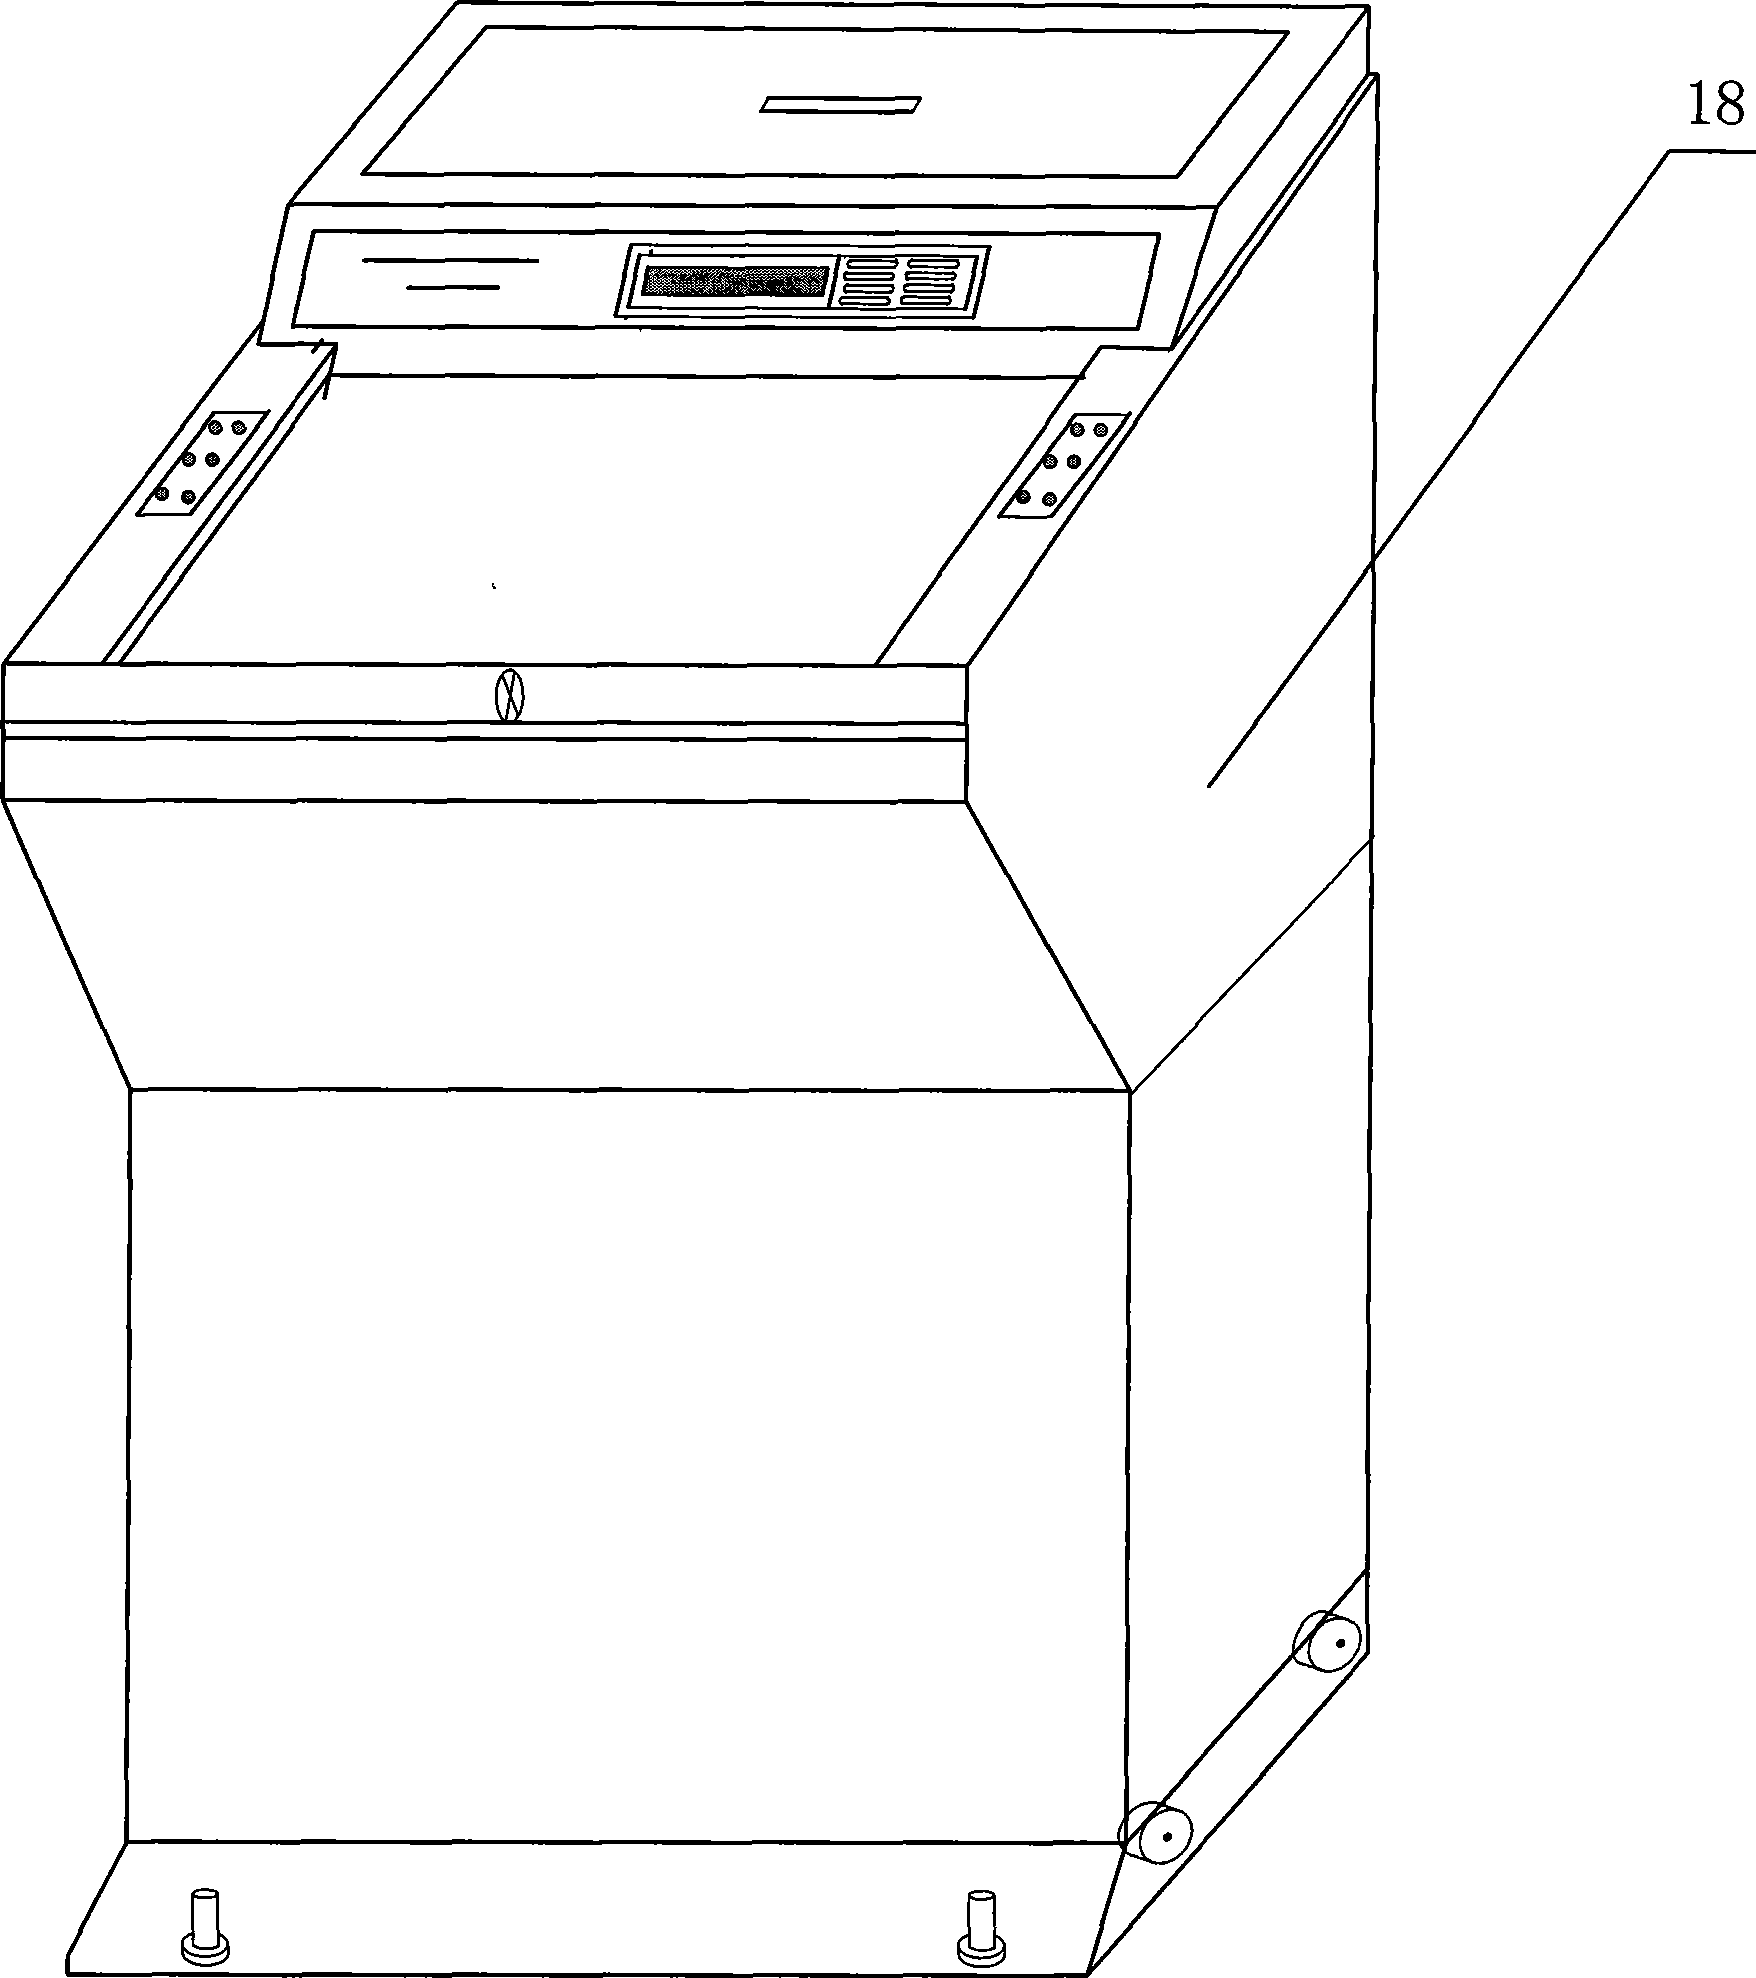 Vertical lathe workstation control system